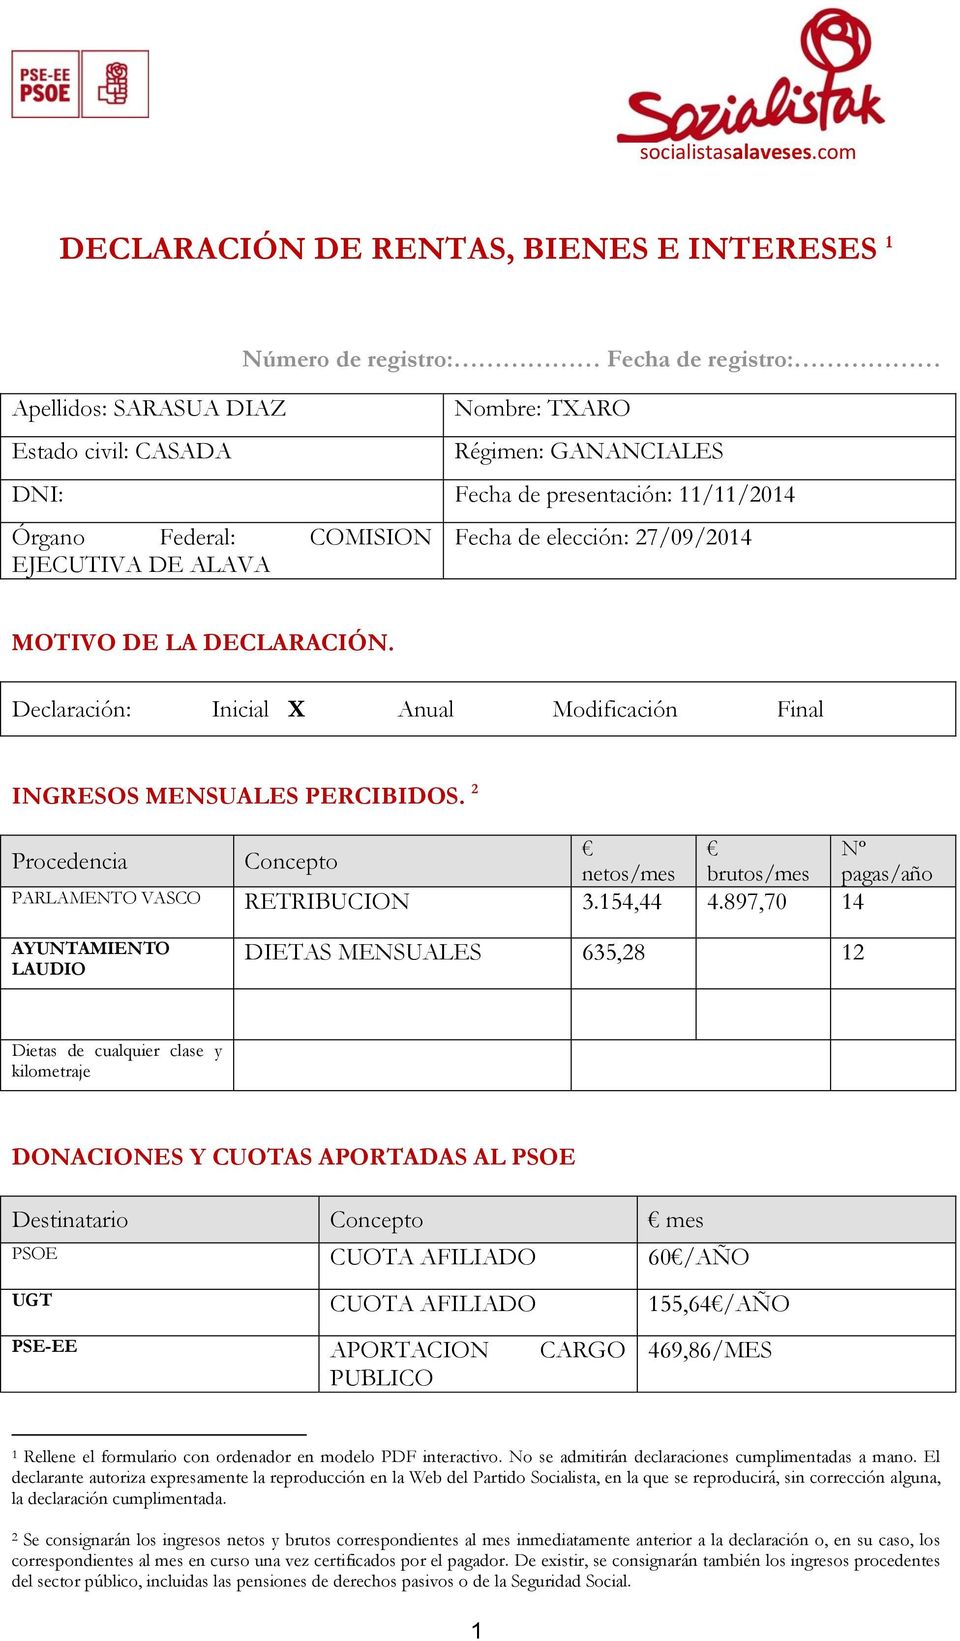 2 Nº Procedencia Concepto netos/mes brutos/mes pagas/año PARLAMENTO VASCO RETRIBUCION 3.154,44 4.